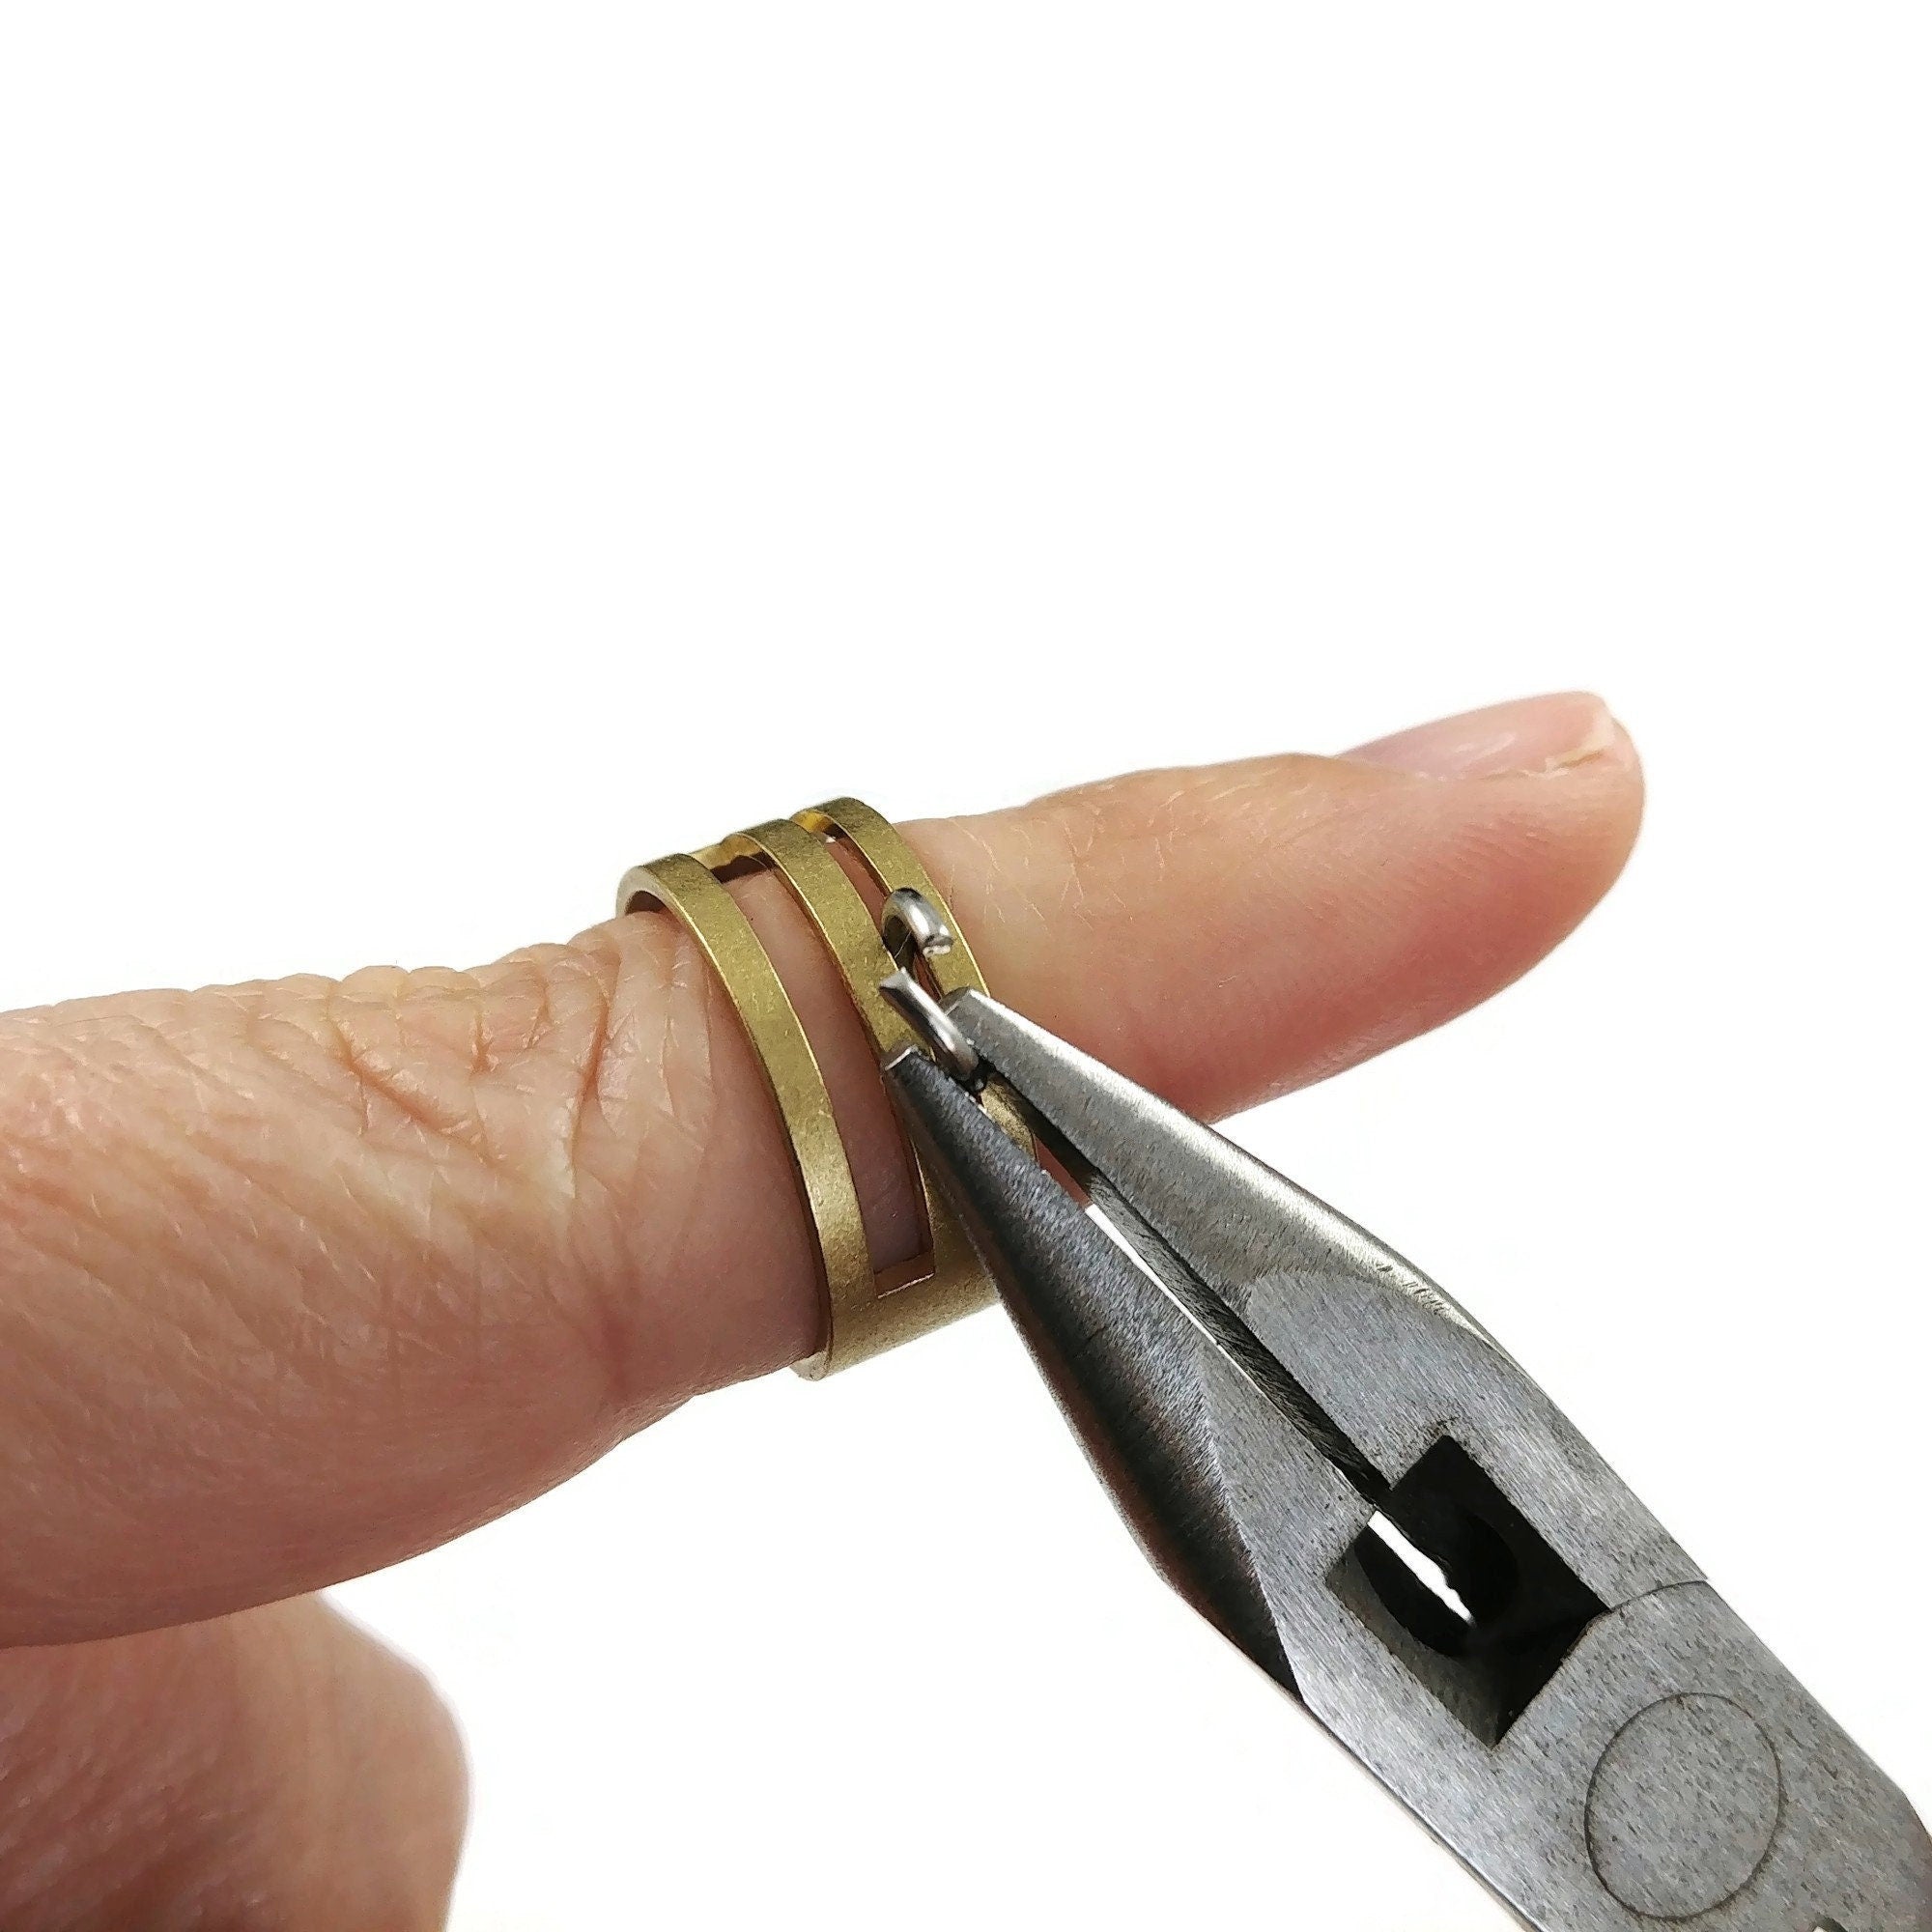 Jump ring opener closer tool, Jewelry making brass finger tool, Nickel free